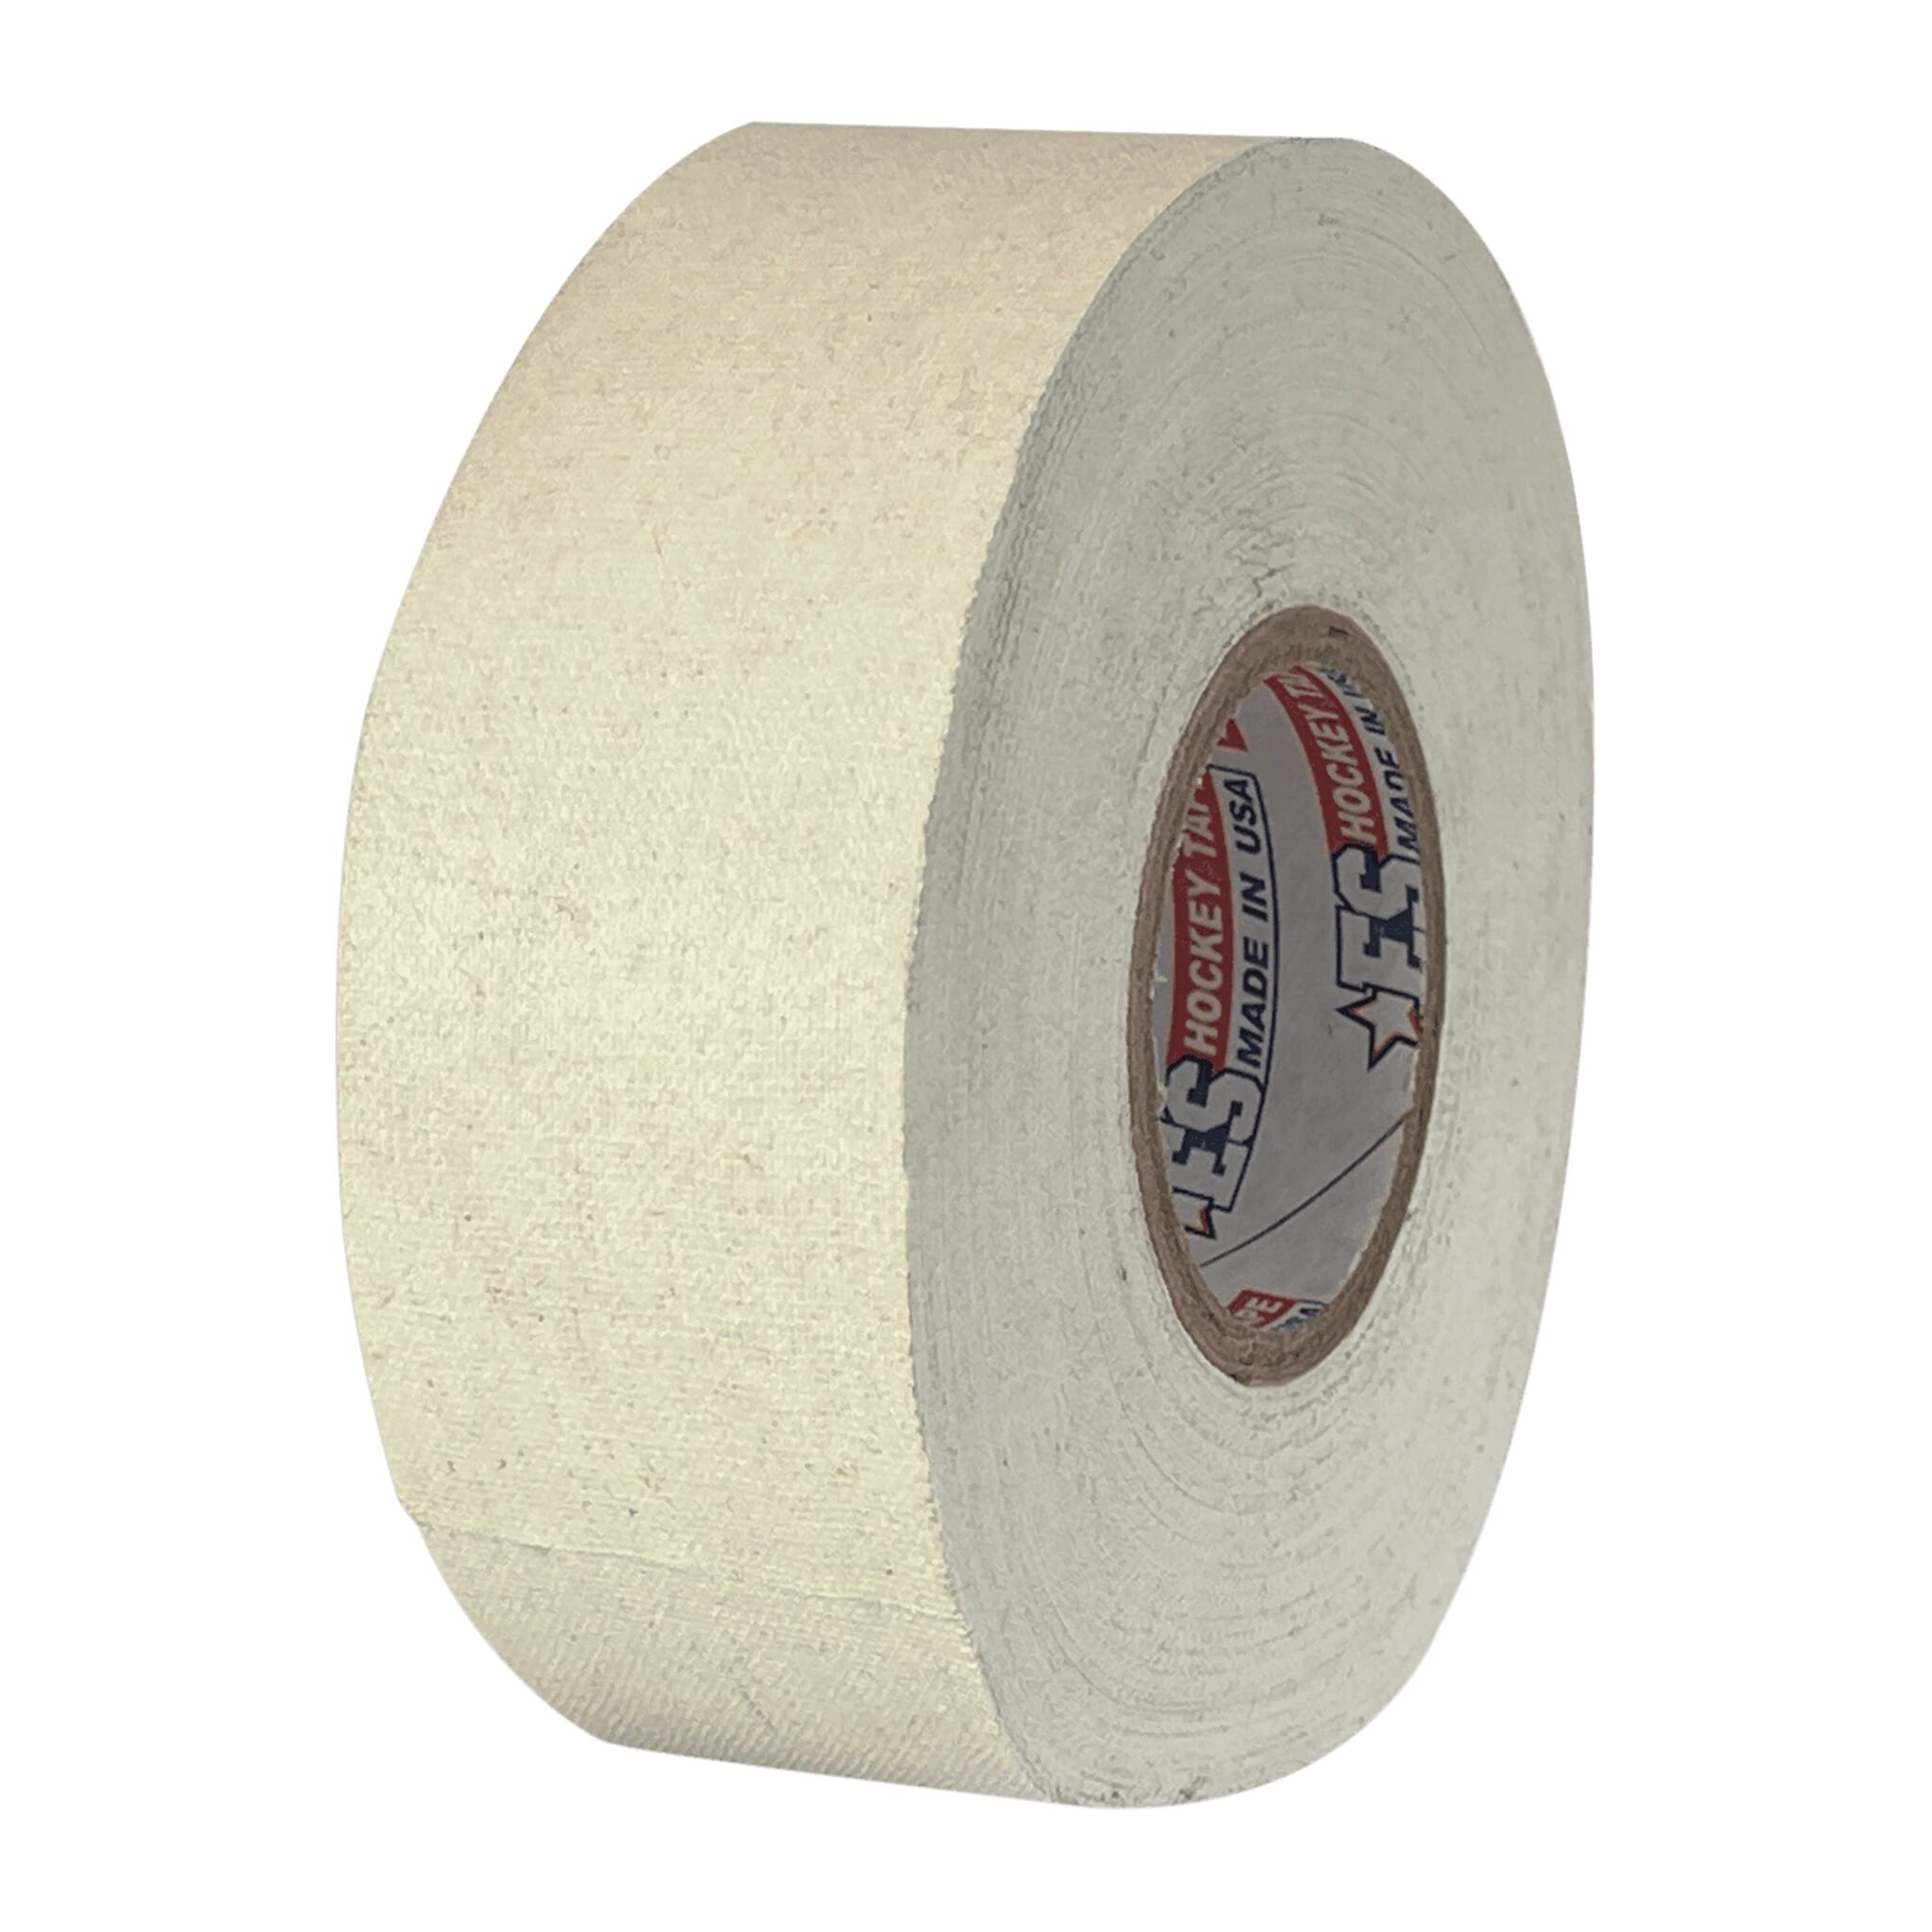 ES tape Cloth Tape 36mmx25m white 40 pack-21/22, hockeytape 36mmx25m White